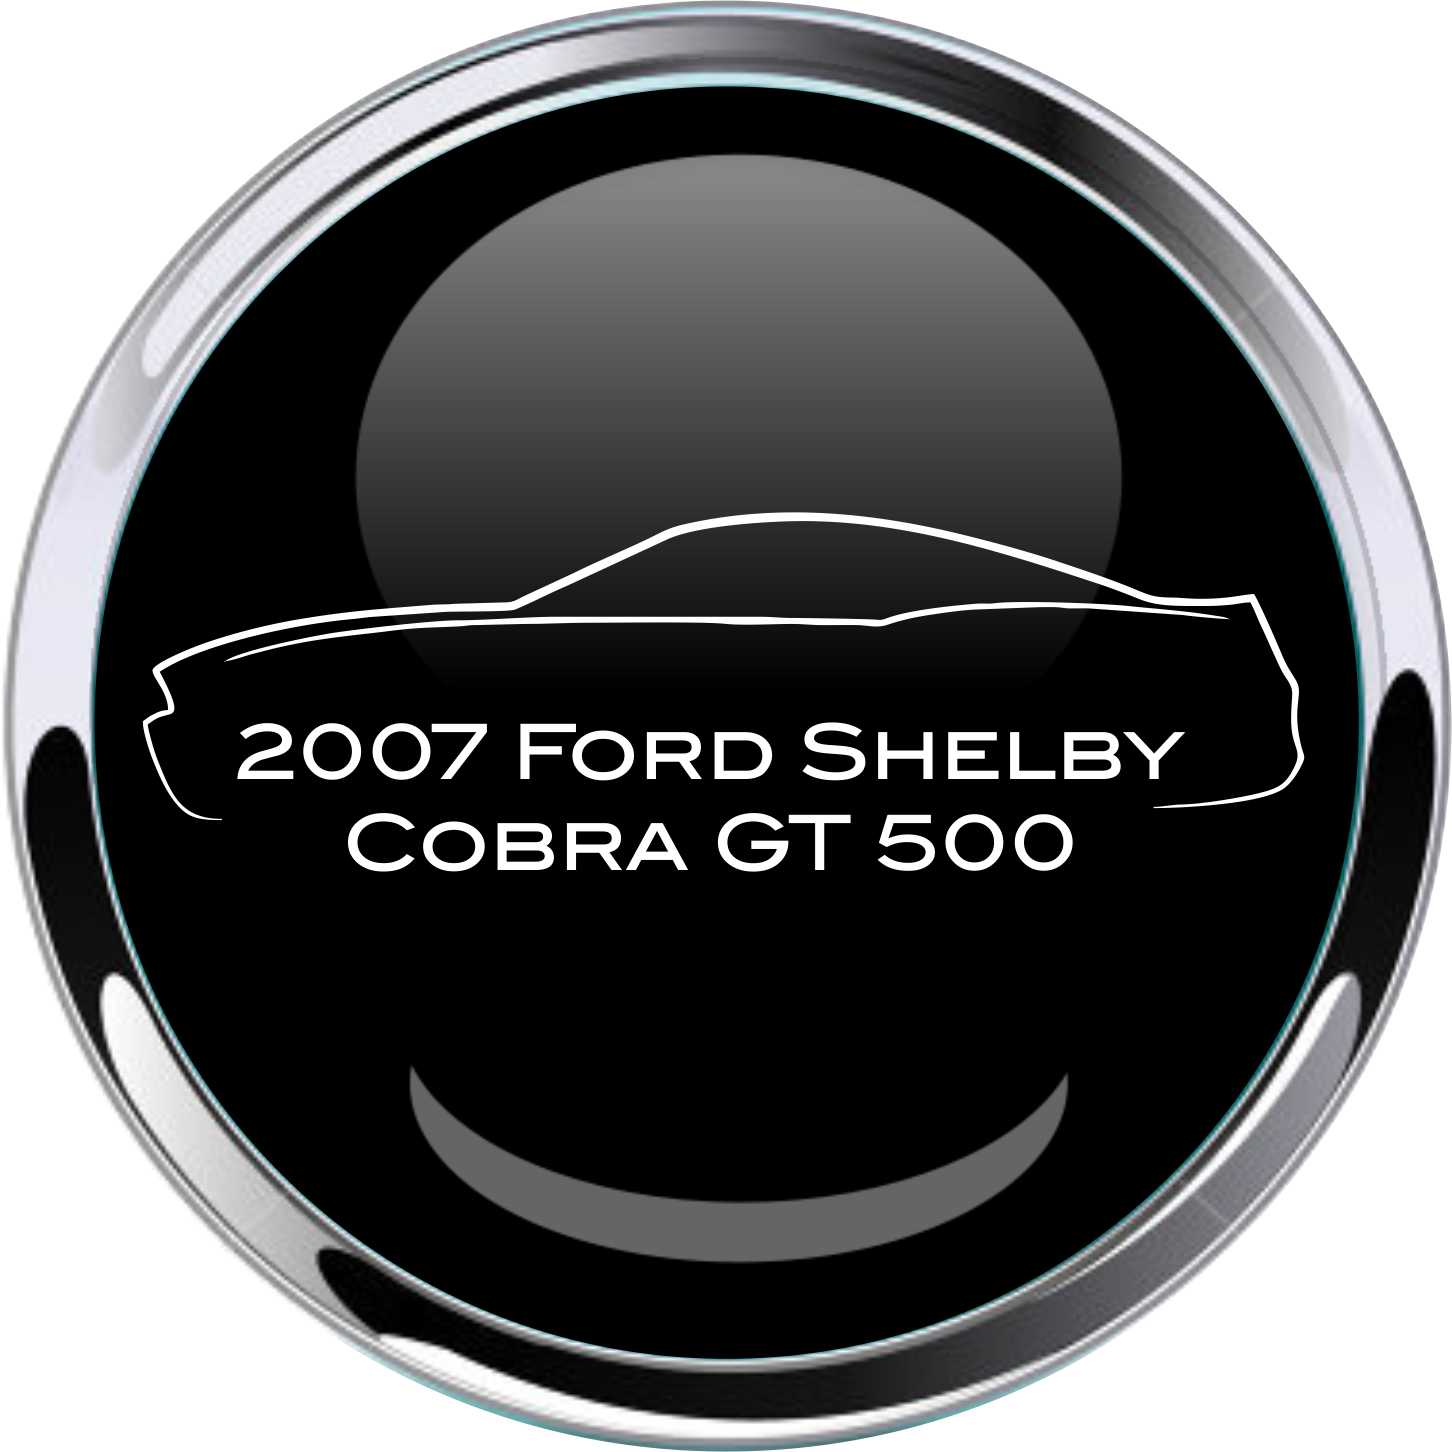 2007 Ford Shelby Cobra GT 500 Car Emblem